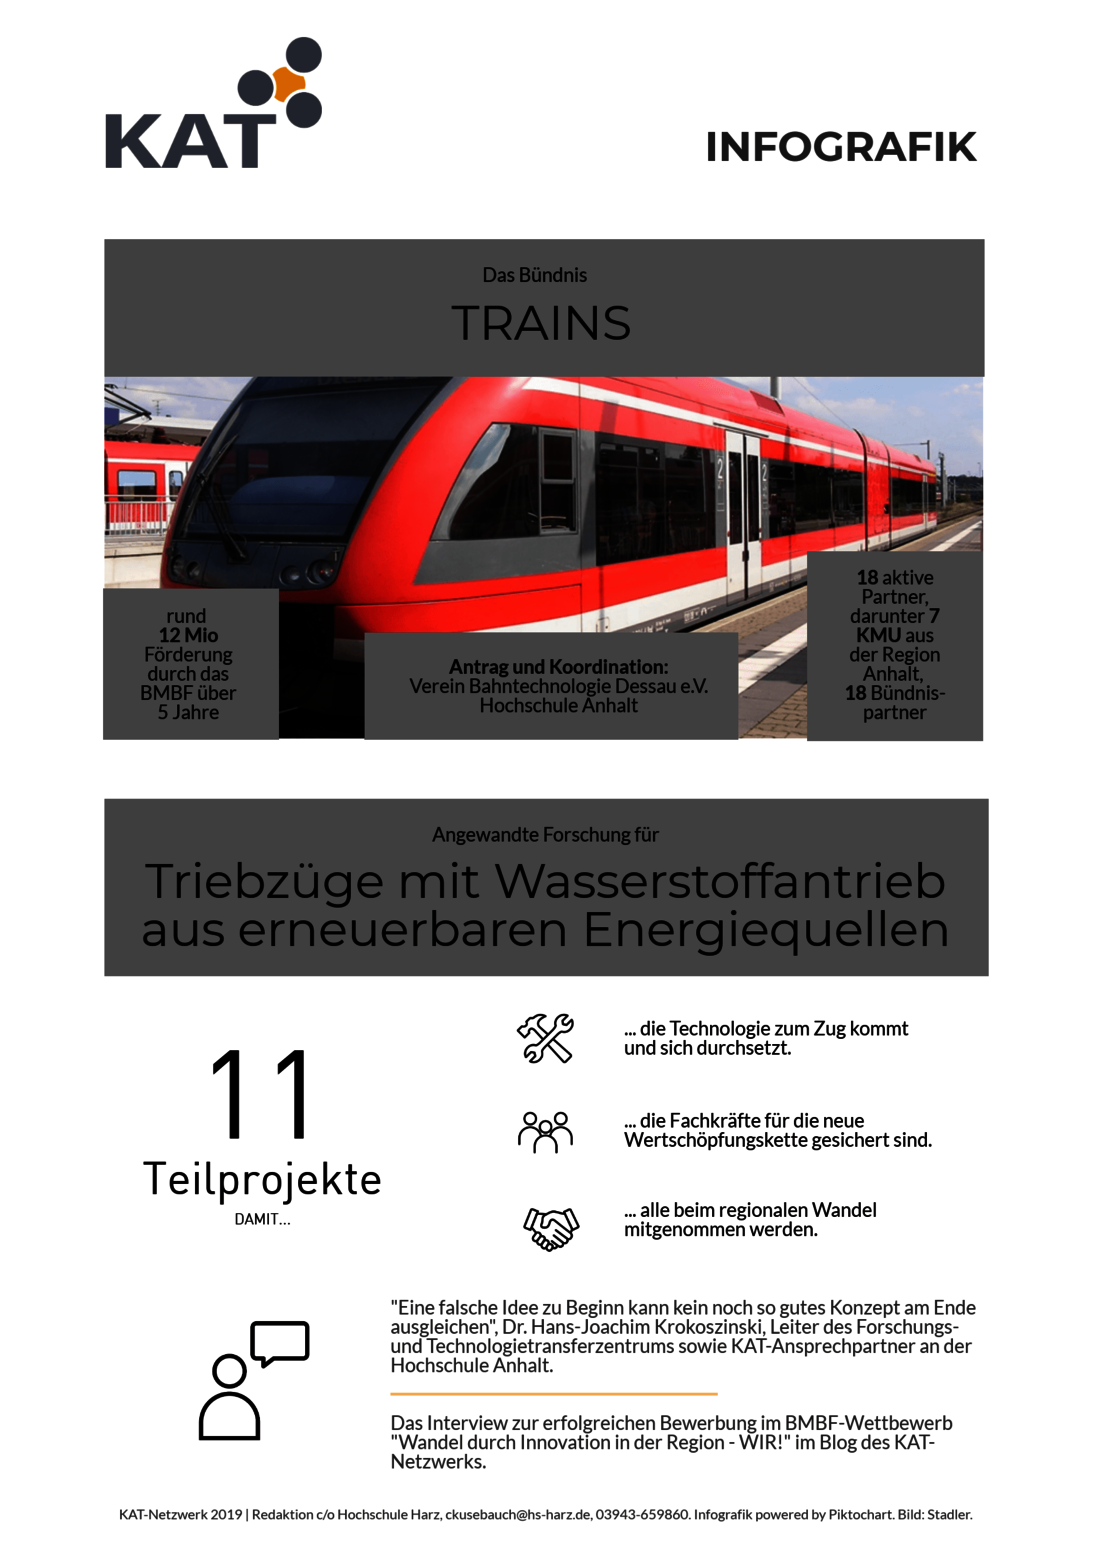 KAT-Netzwerk Infografik Trains Hochschule Anhalt Bahntechnologie Dessau